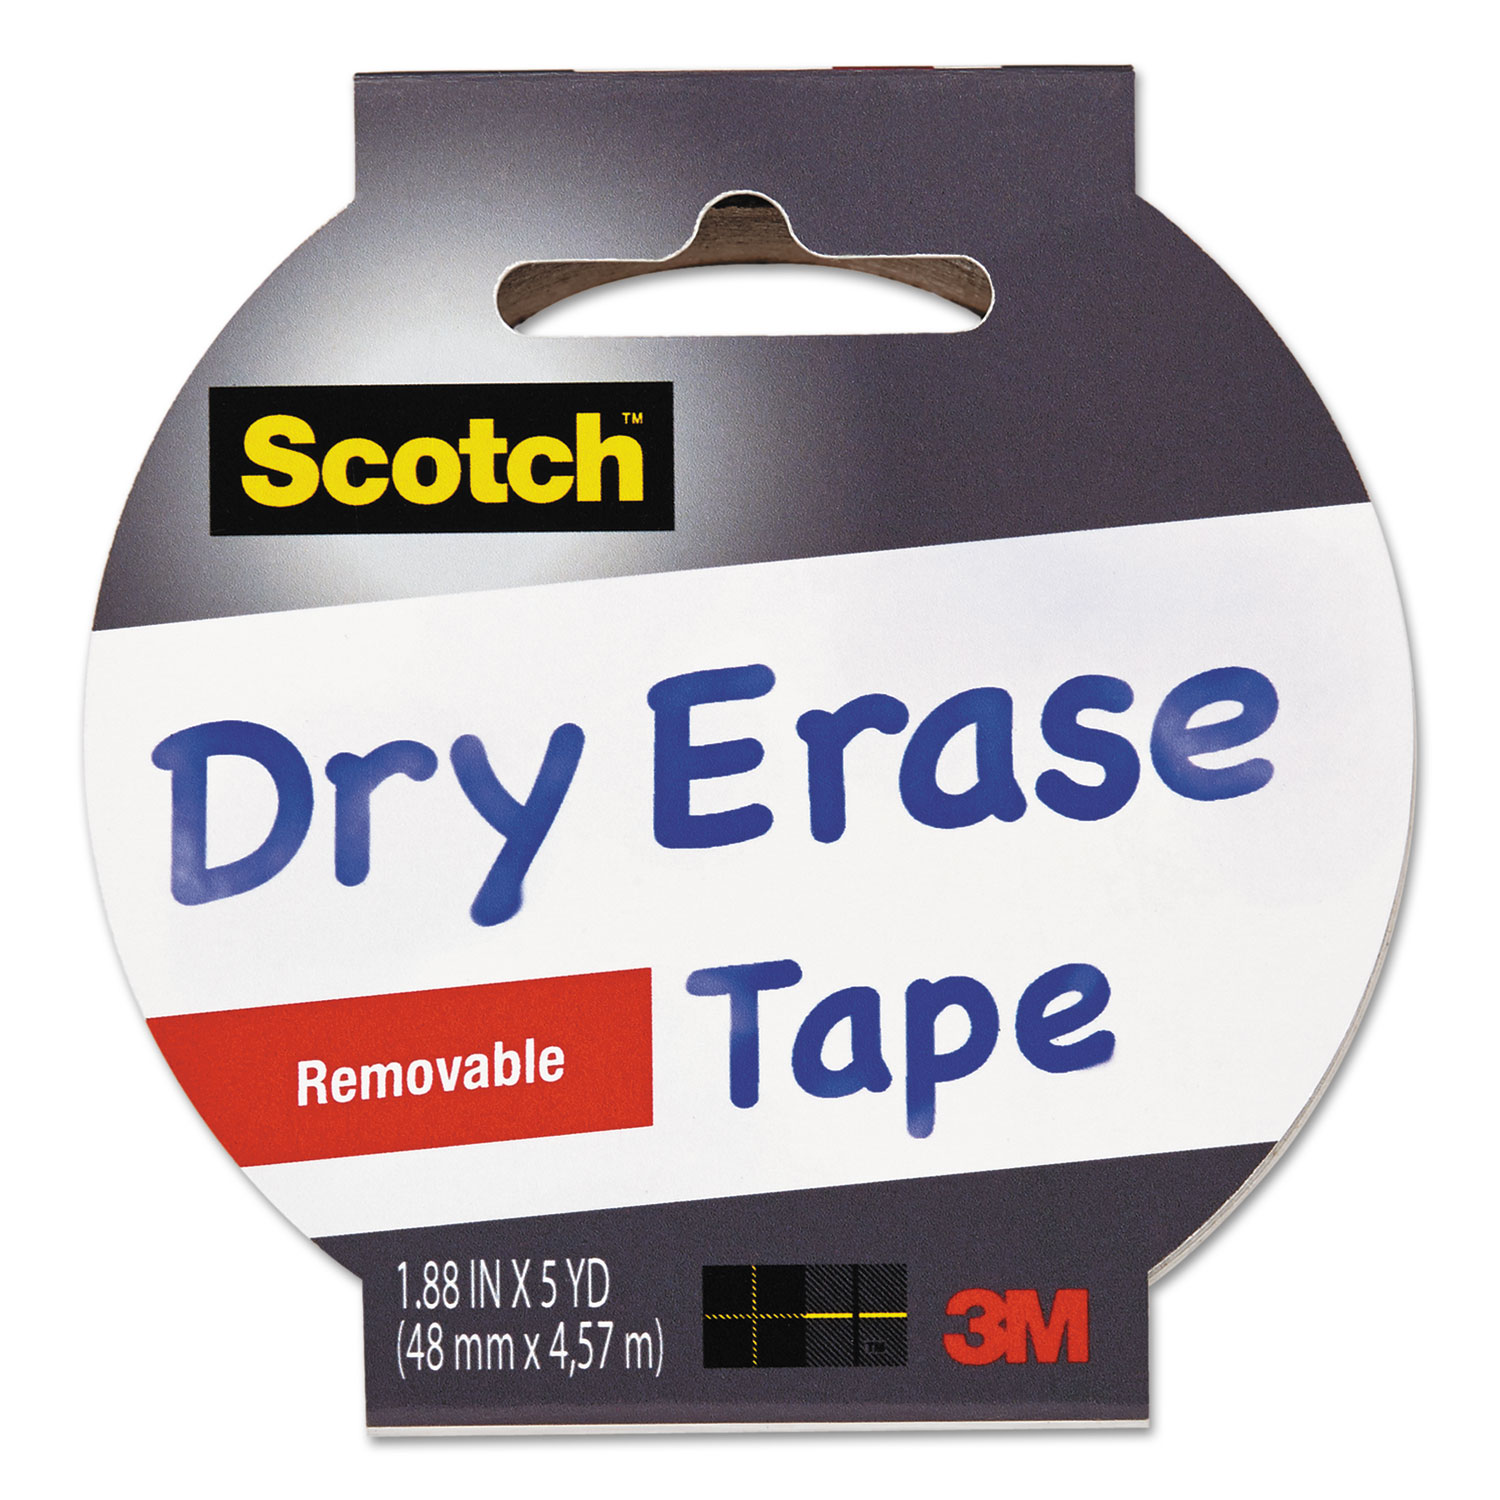  Scotch 1905R-DE-WHT Dry Erase Tape, 3 Core, 1.88 x 5 yds, White (MMM1905RDEWHT) 